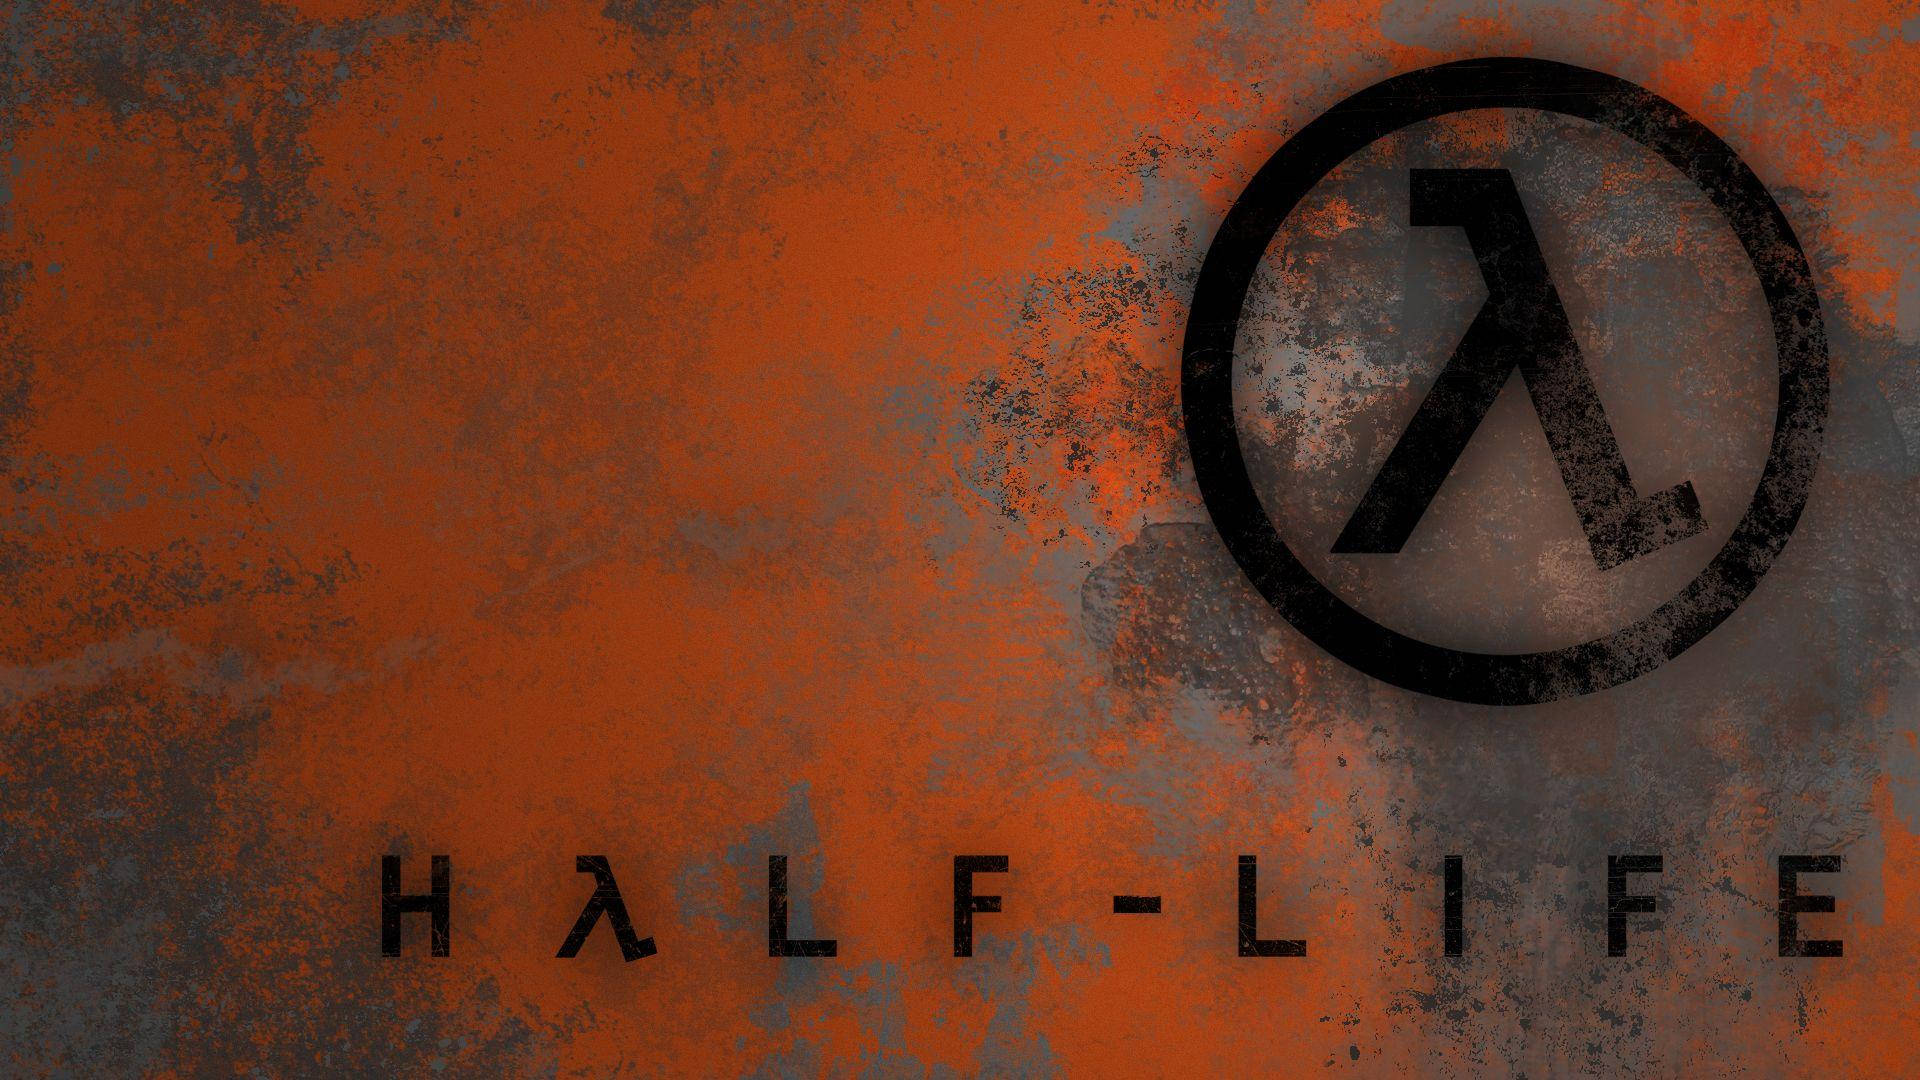 Half-life Logo On Rusty Wall Background